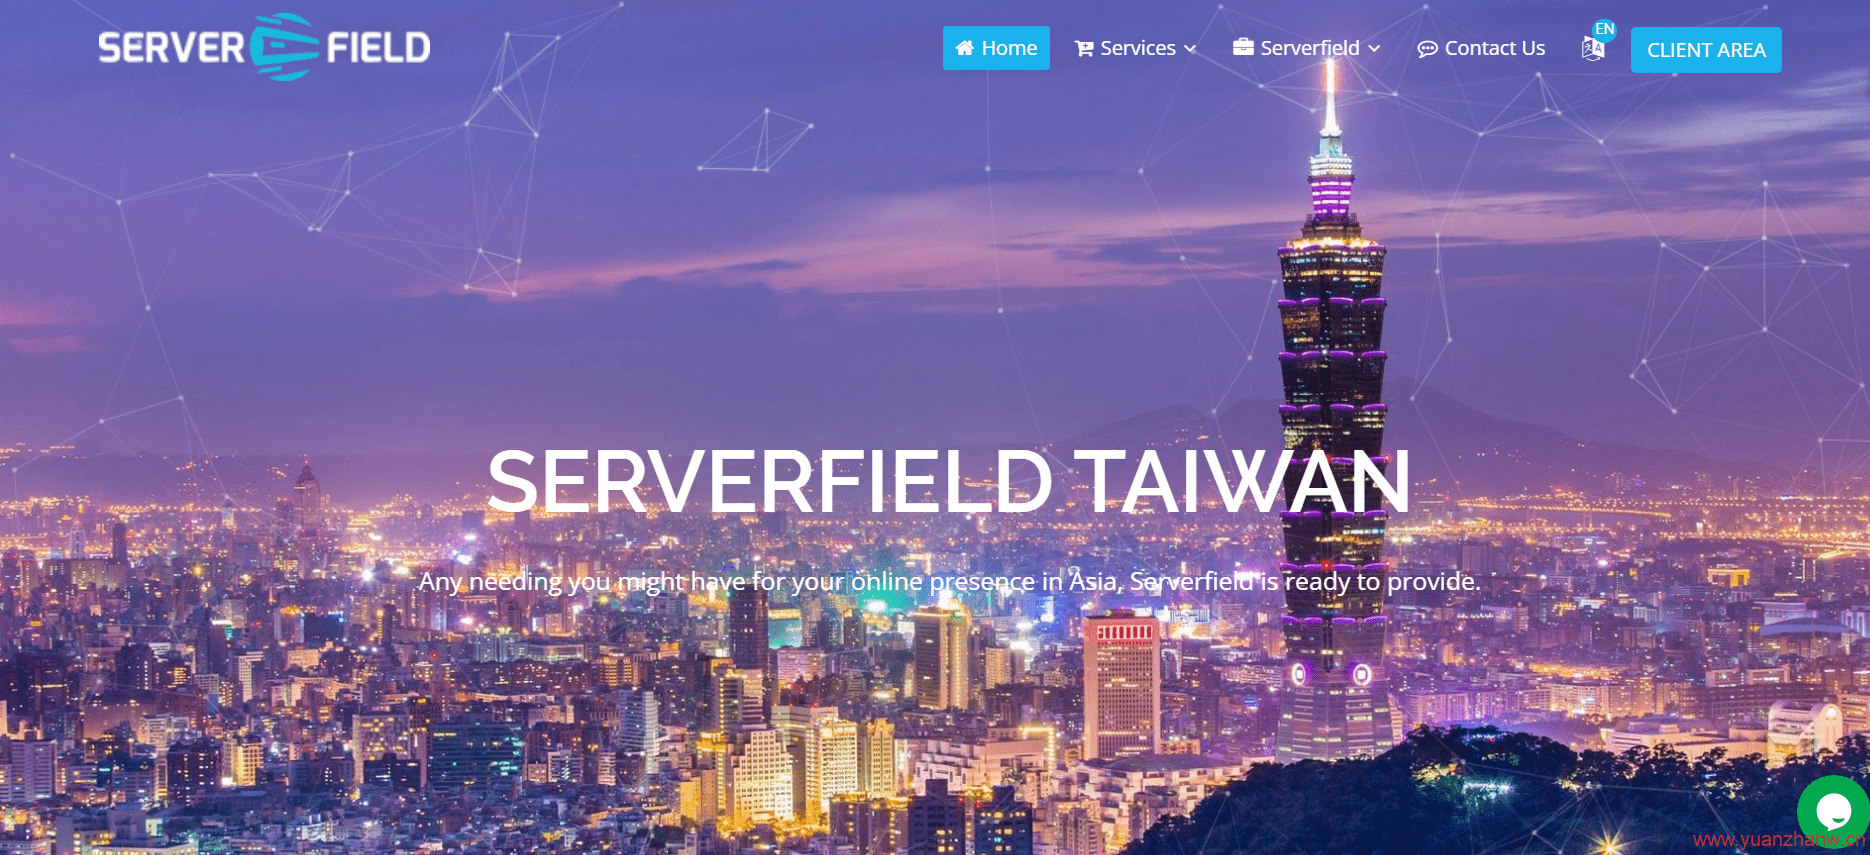 %Serverfield – 台湾原生IP独立服务器/VPS，可解锁台湾Netflix/Disne等流媒体，4核/8G/100G SSD硬盘/无限流量/100Mbps带宽，$189/月-猿站网-插图